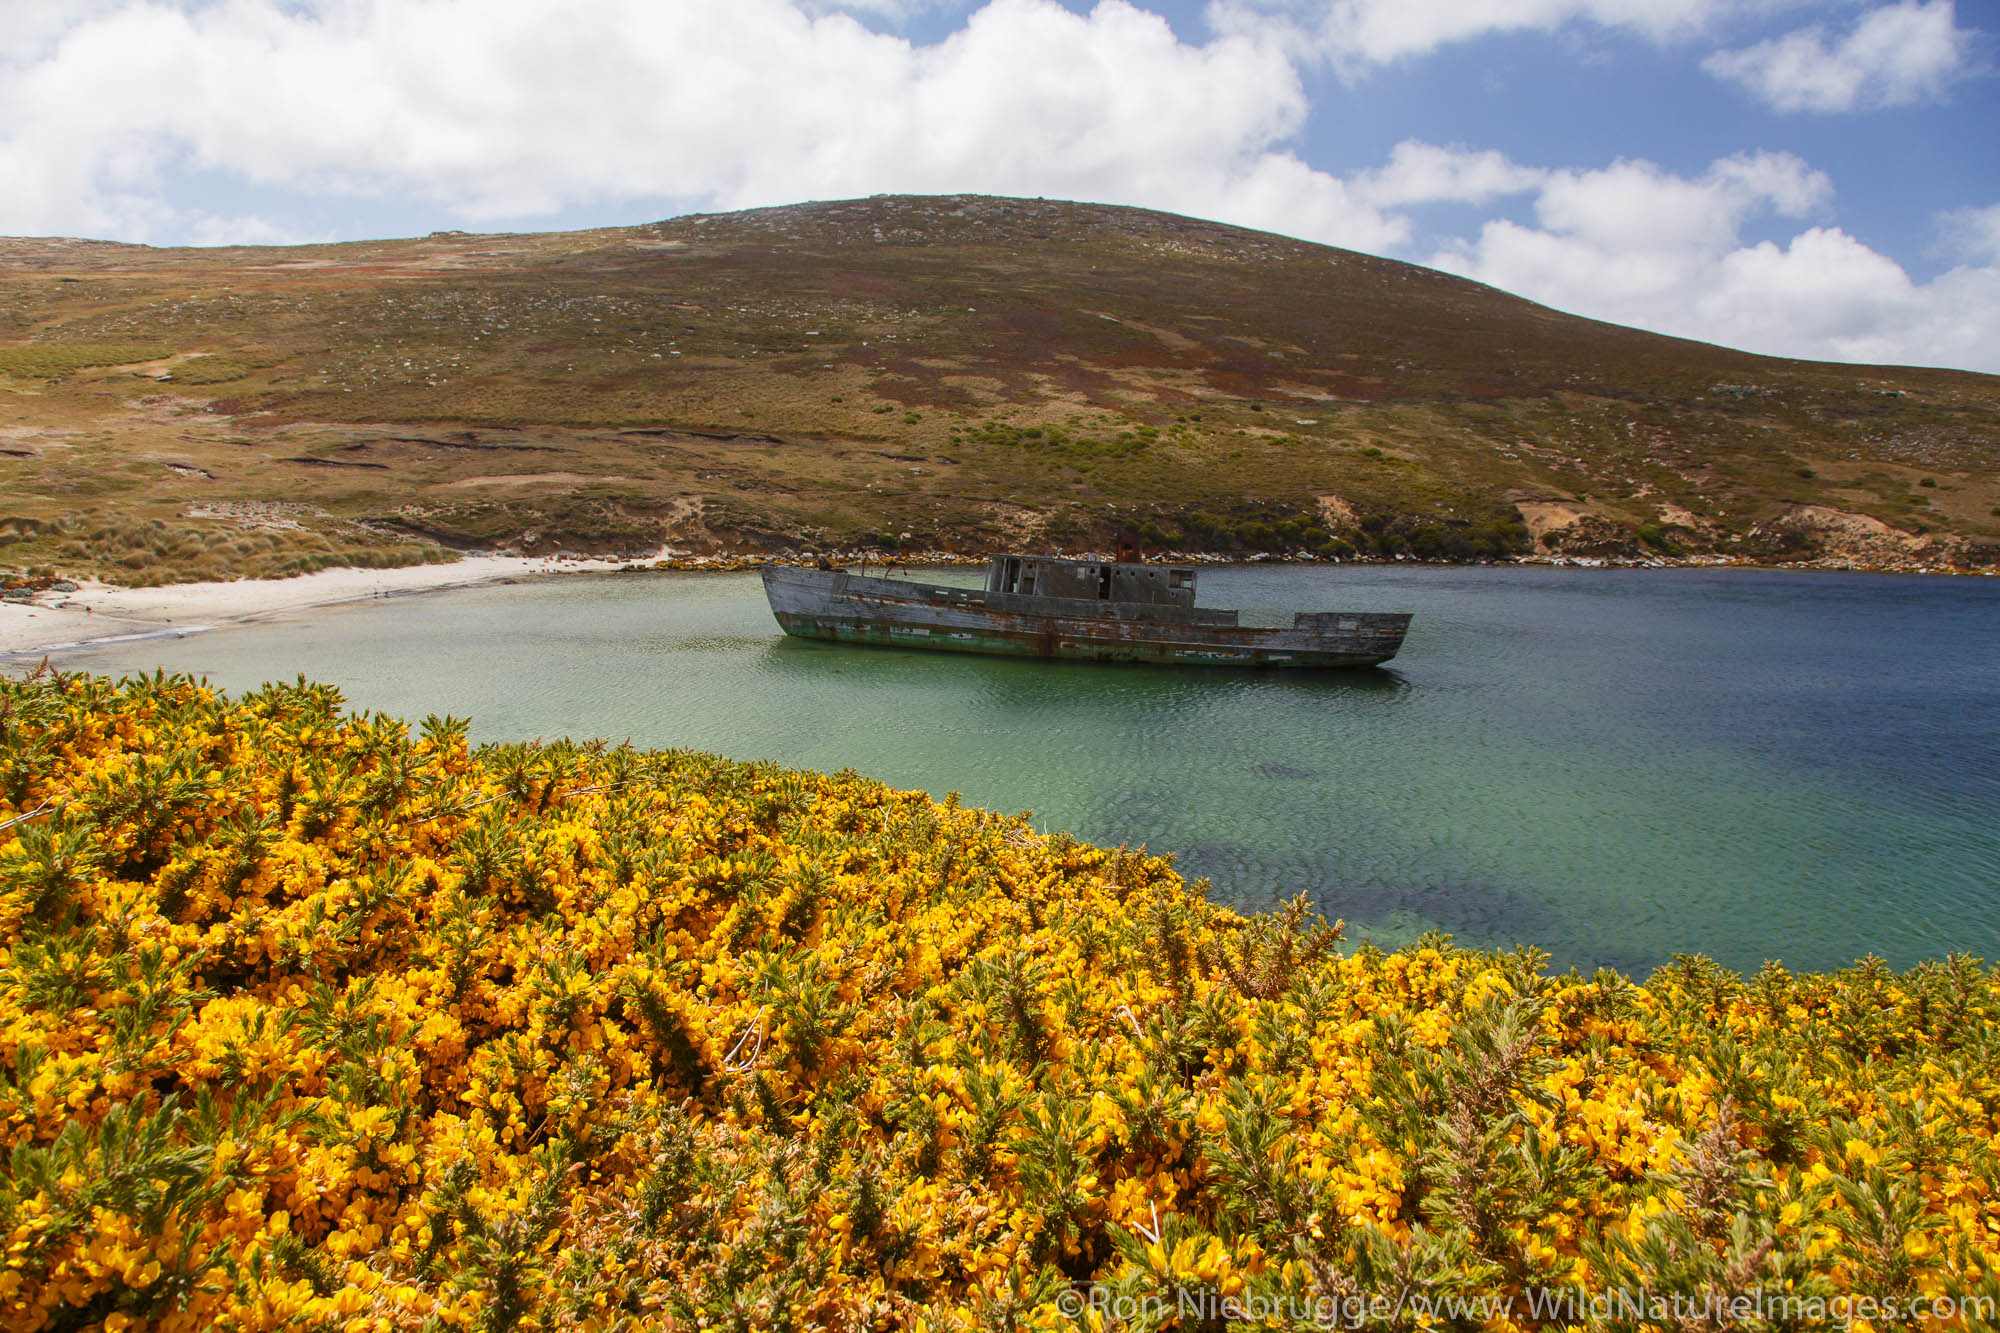 Shipwreck, New Island Conservation Trust, New Island, Falkland Islands.